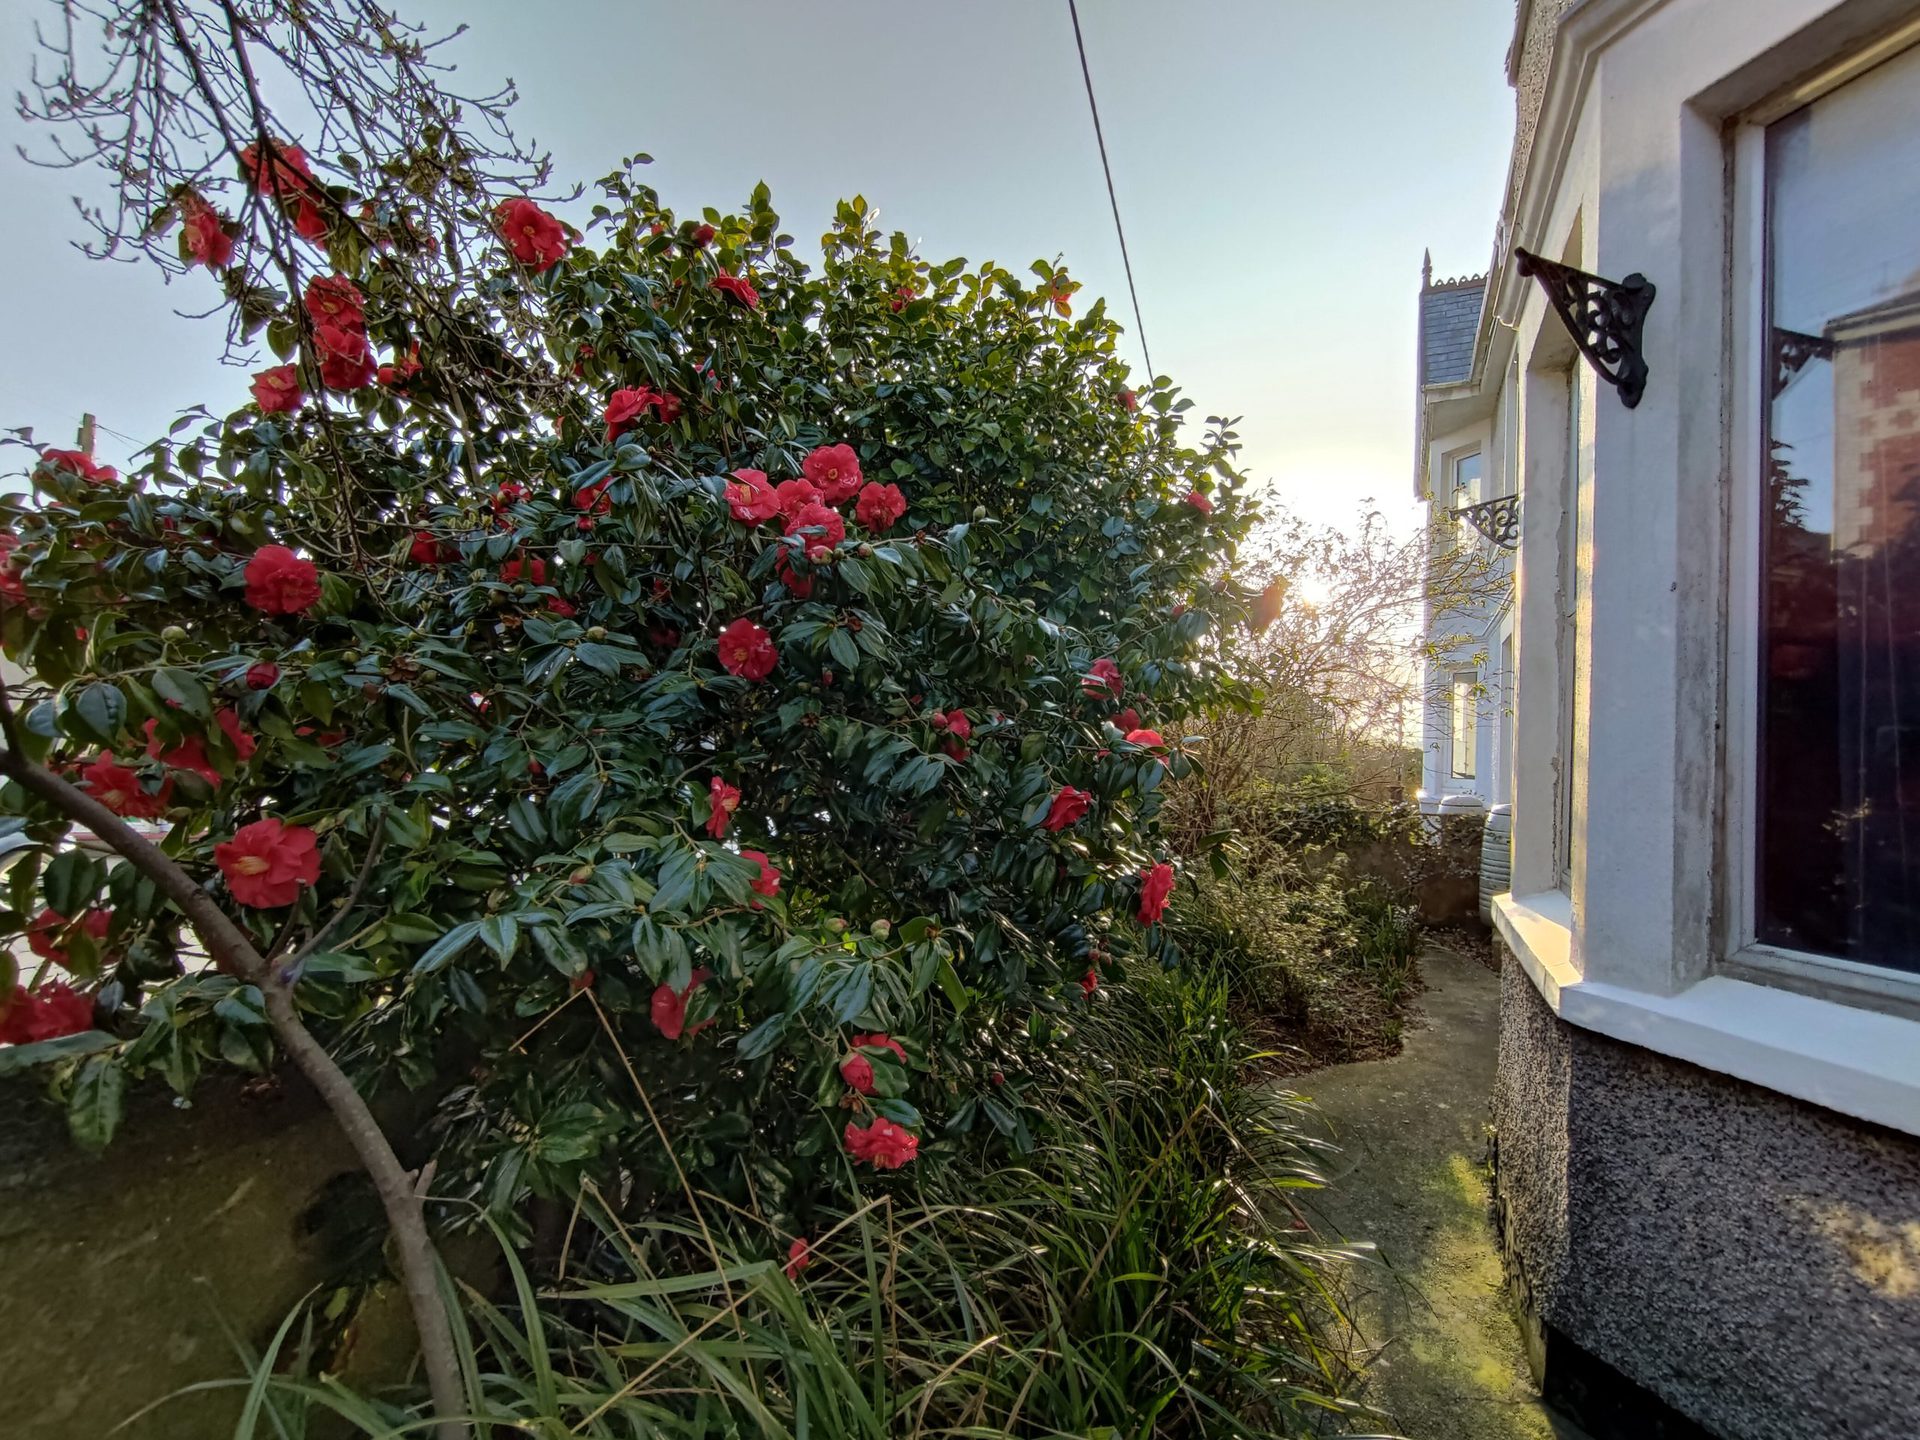 ROG Phone 5 ultra wide camera sample of a flowery bush